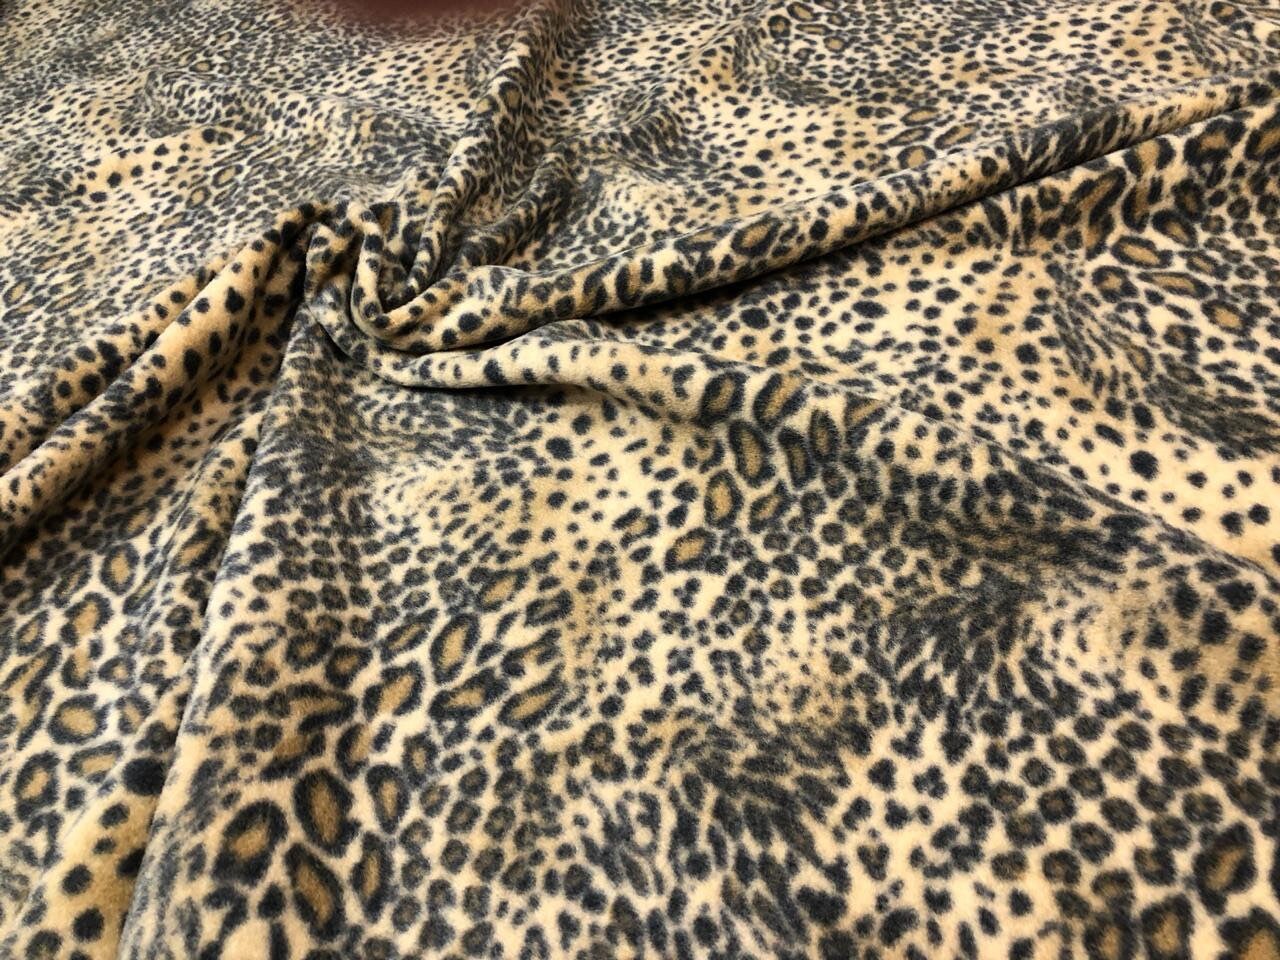 Cheetah wool fabric. Designer wool cloth fabric/soft leopard | Etsy